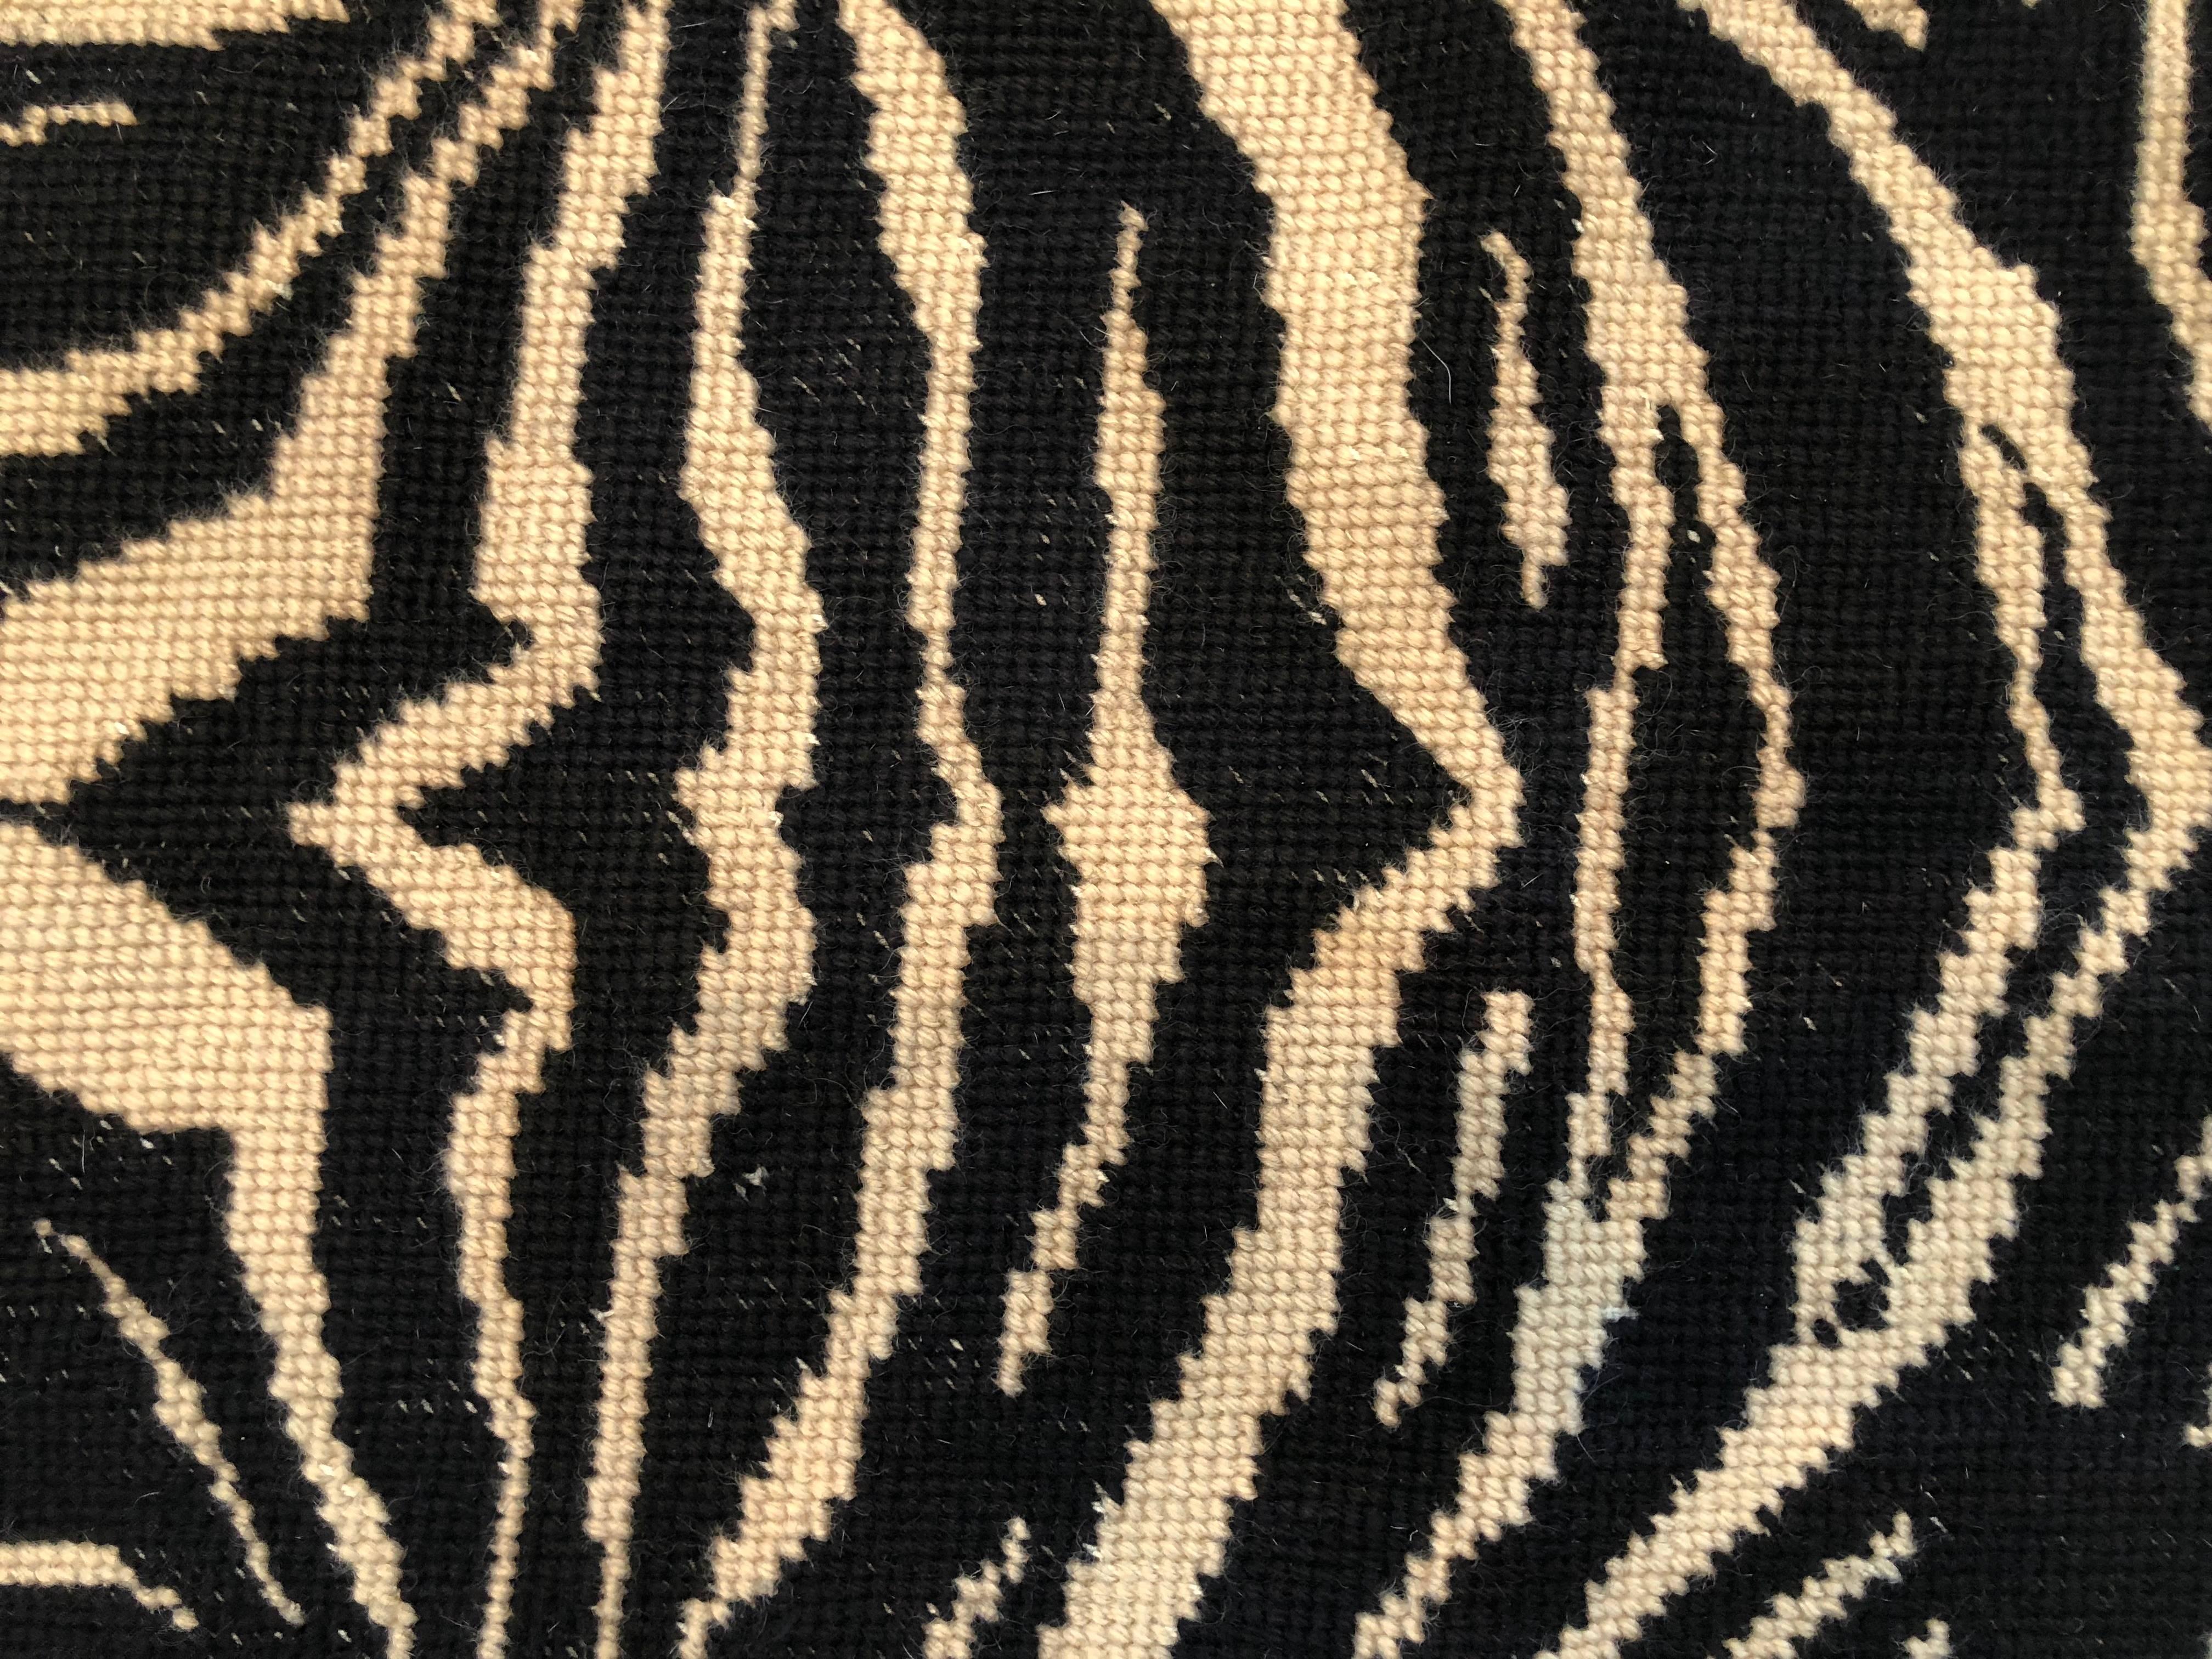 American Artisan Crafted Needlepoint Zebra Rug